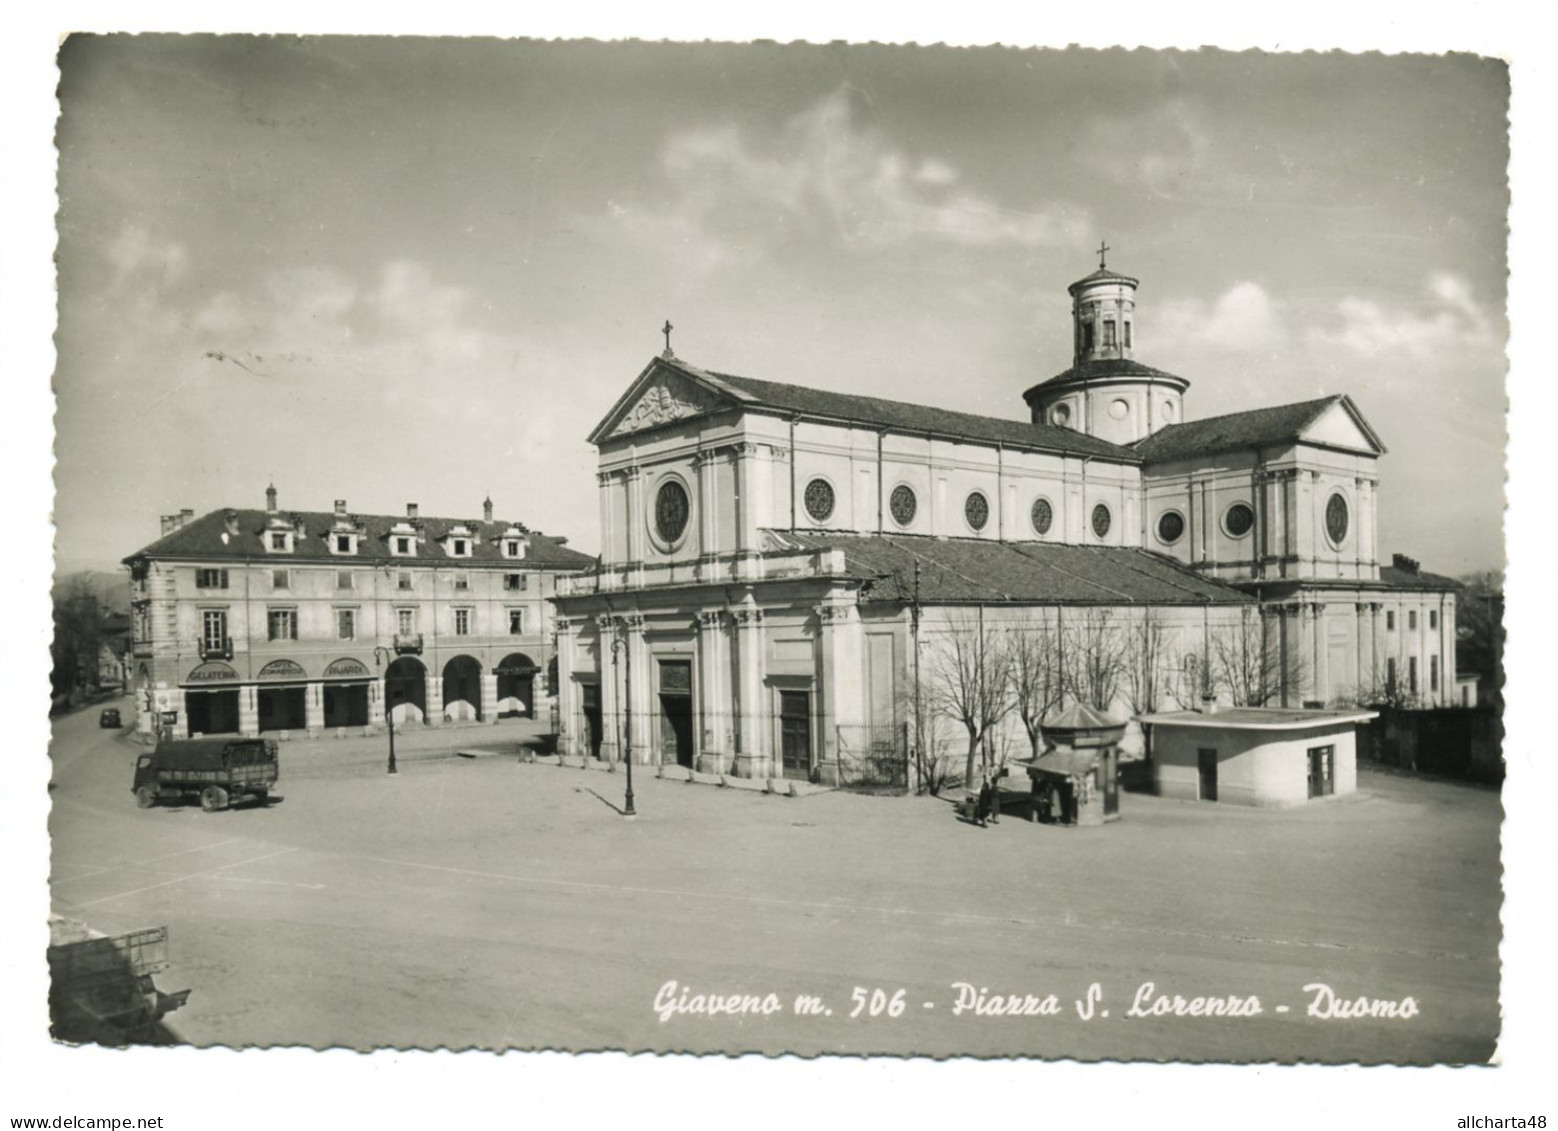 D2191] GIAVENO Torino PIAZZA SAN LORENZO - DUOMO Camion Viaggiata 1958 - Multi-vues, Vues Panoramiques